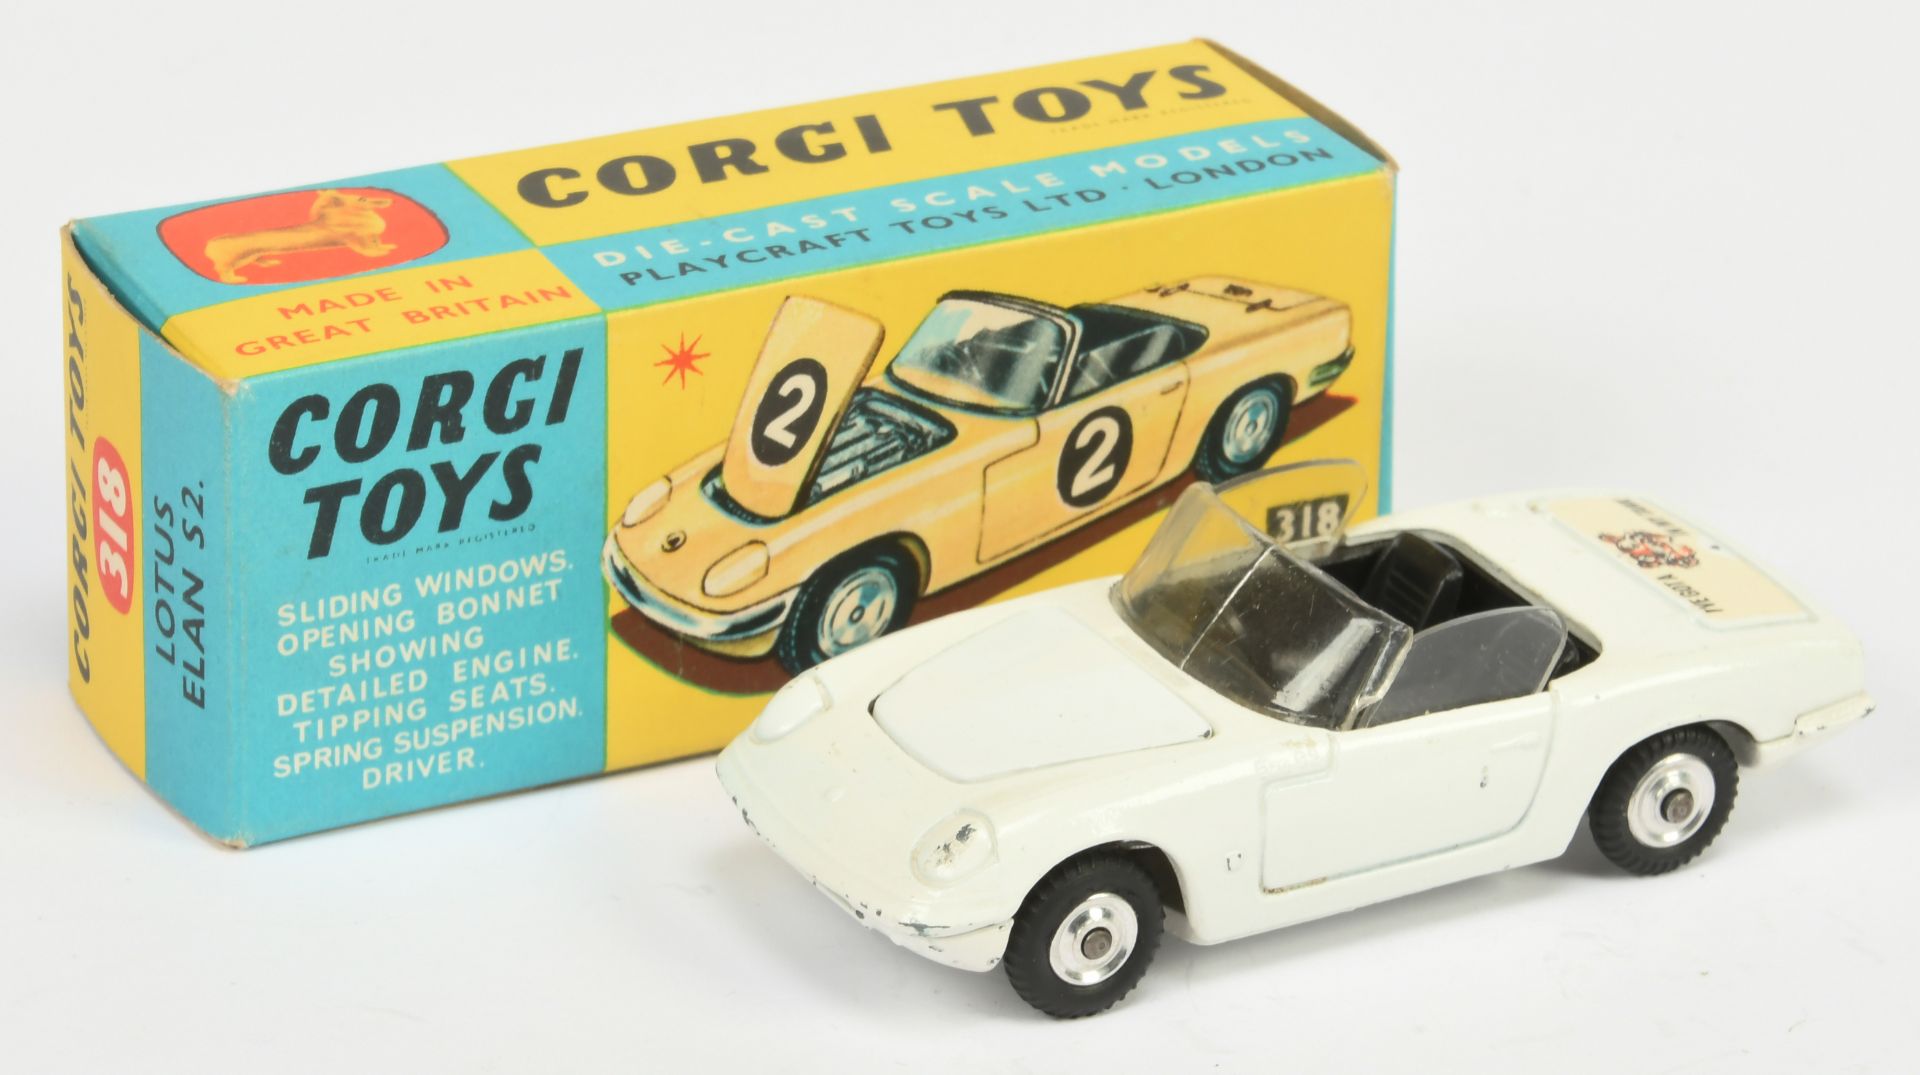 Corgi Toys 318 Lotus Elan S2 "Ive Got A Tiger In My Tank" - white body, black interior, silver tr...